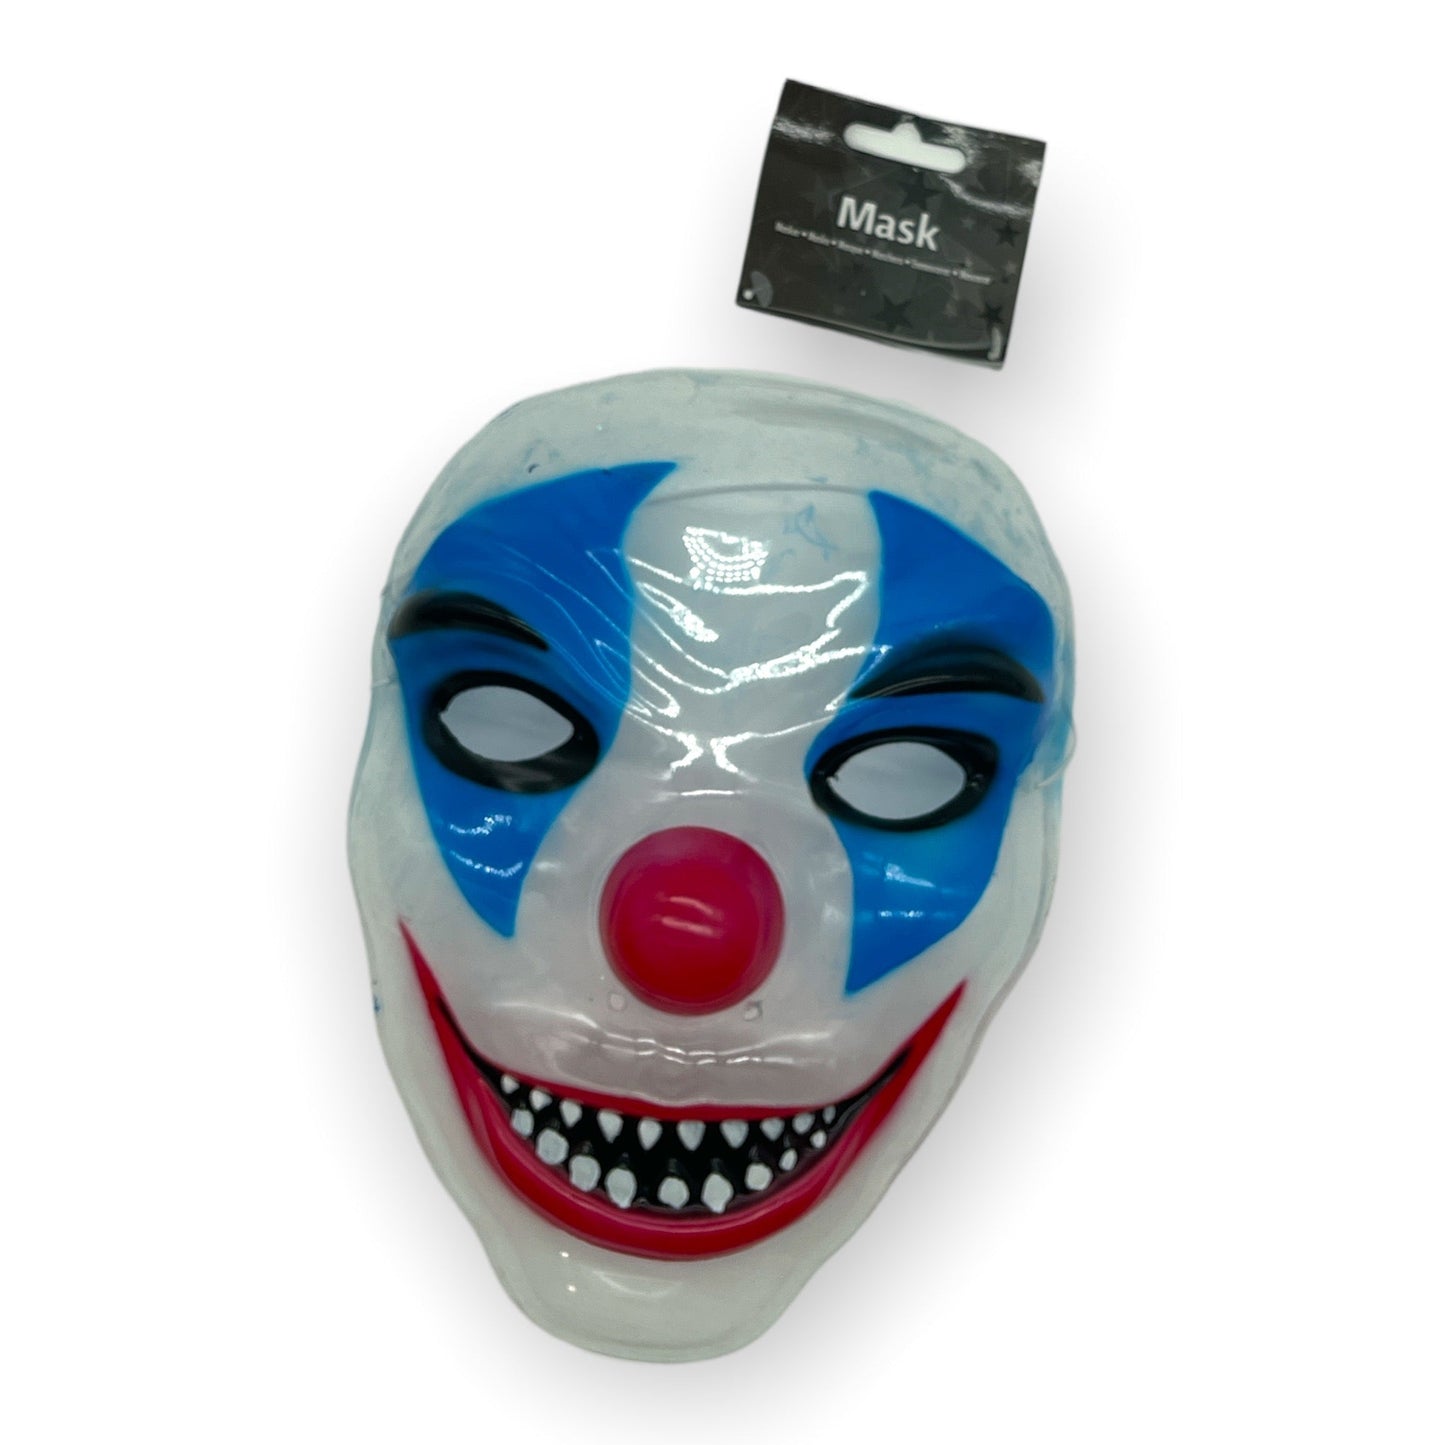 Kinky Pleasure - FT080 - Killer Clown Mask - 1 Piece